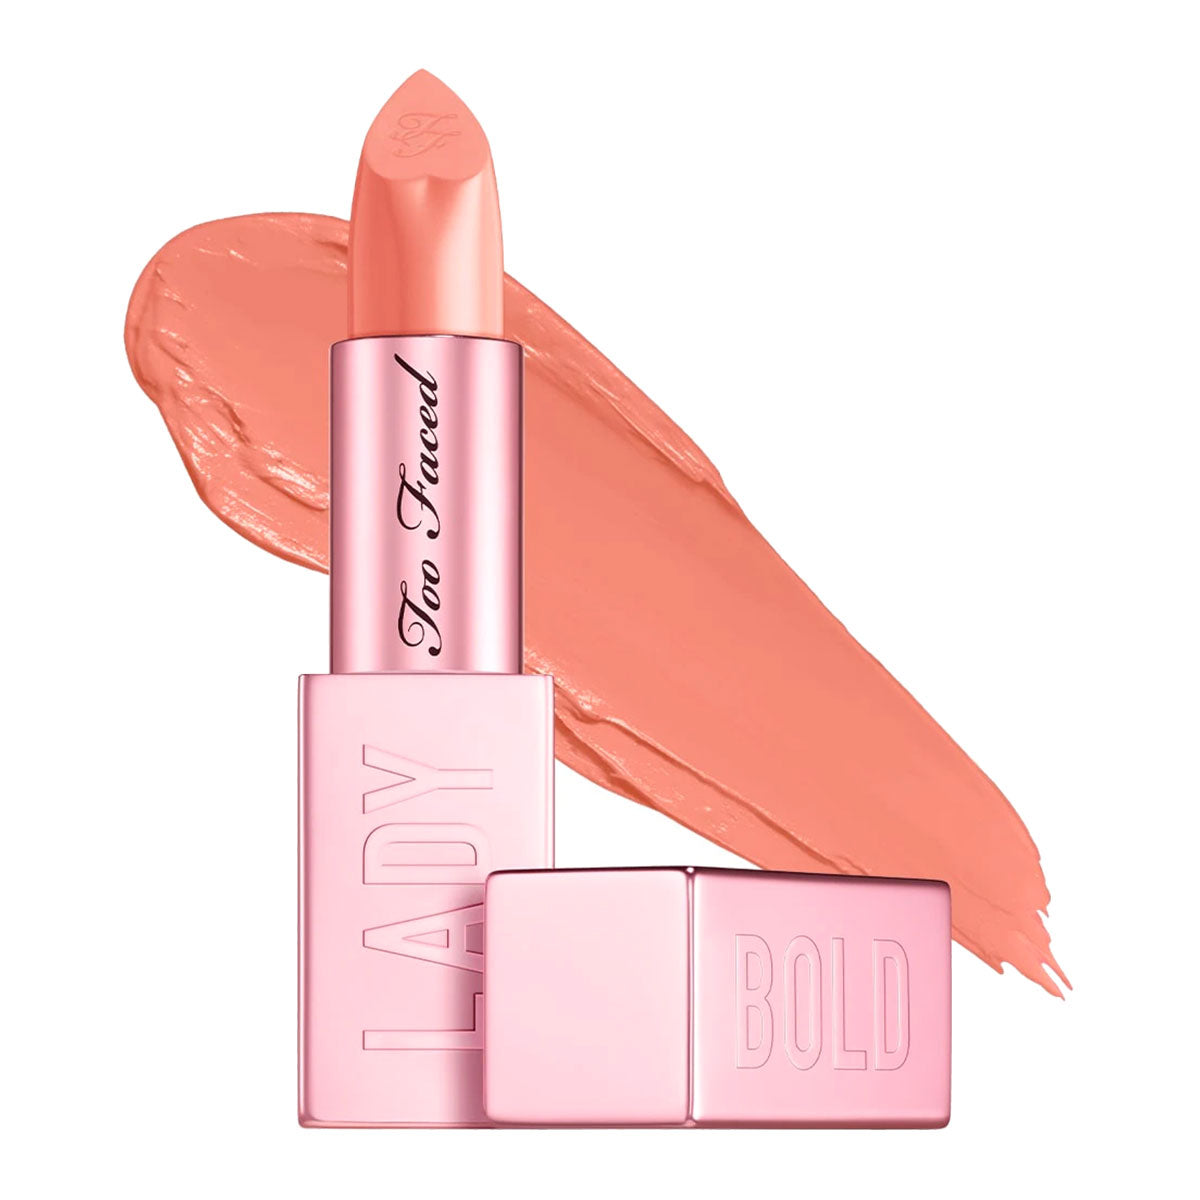 Too Faced Lady Bold Em-Power Pigment Lipstick | Brave <3